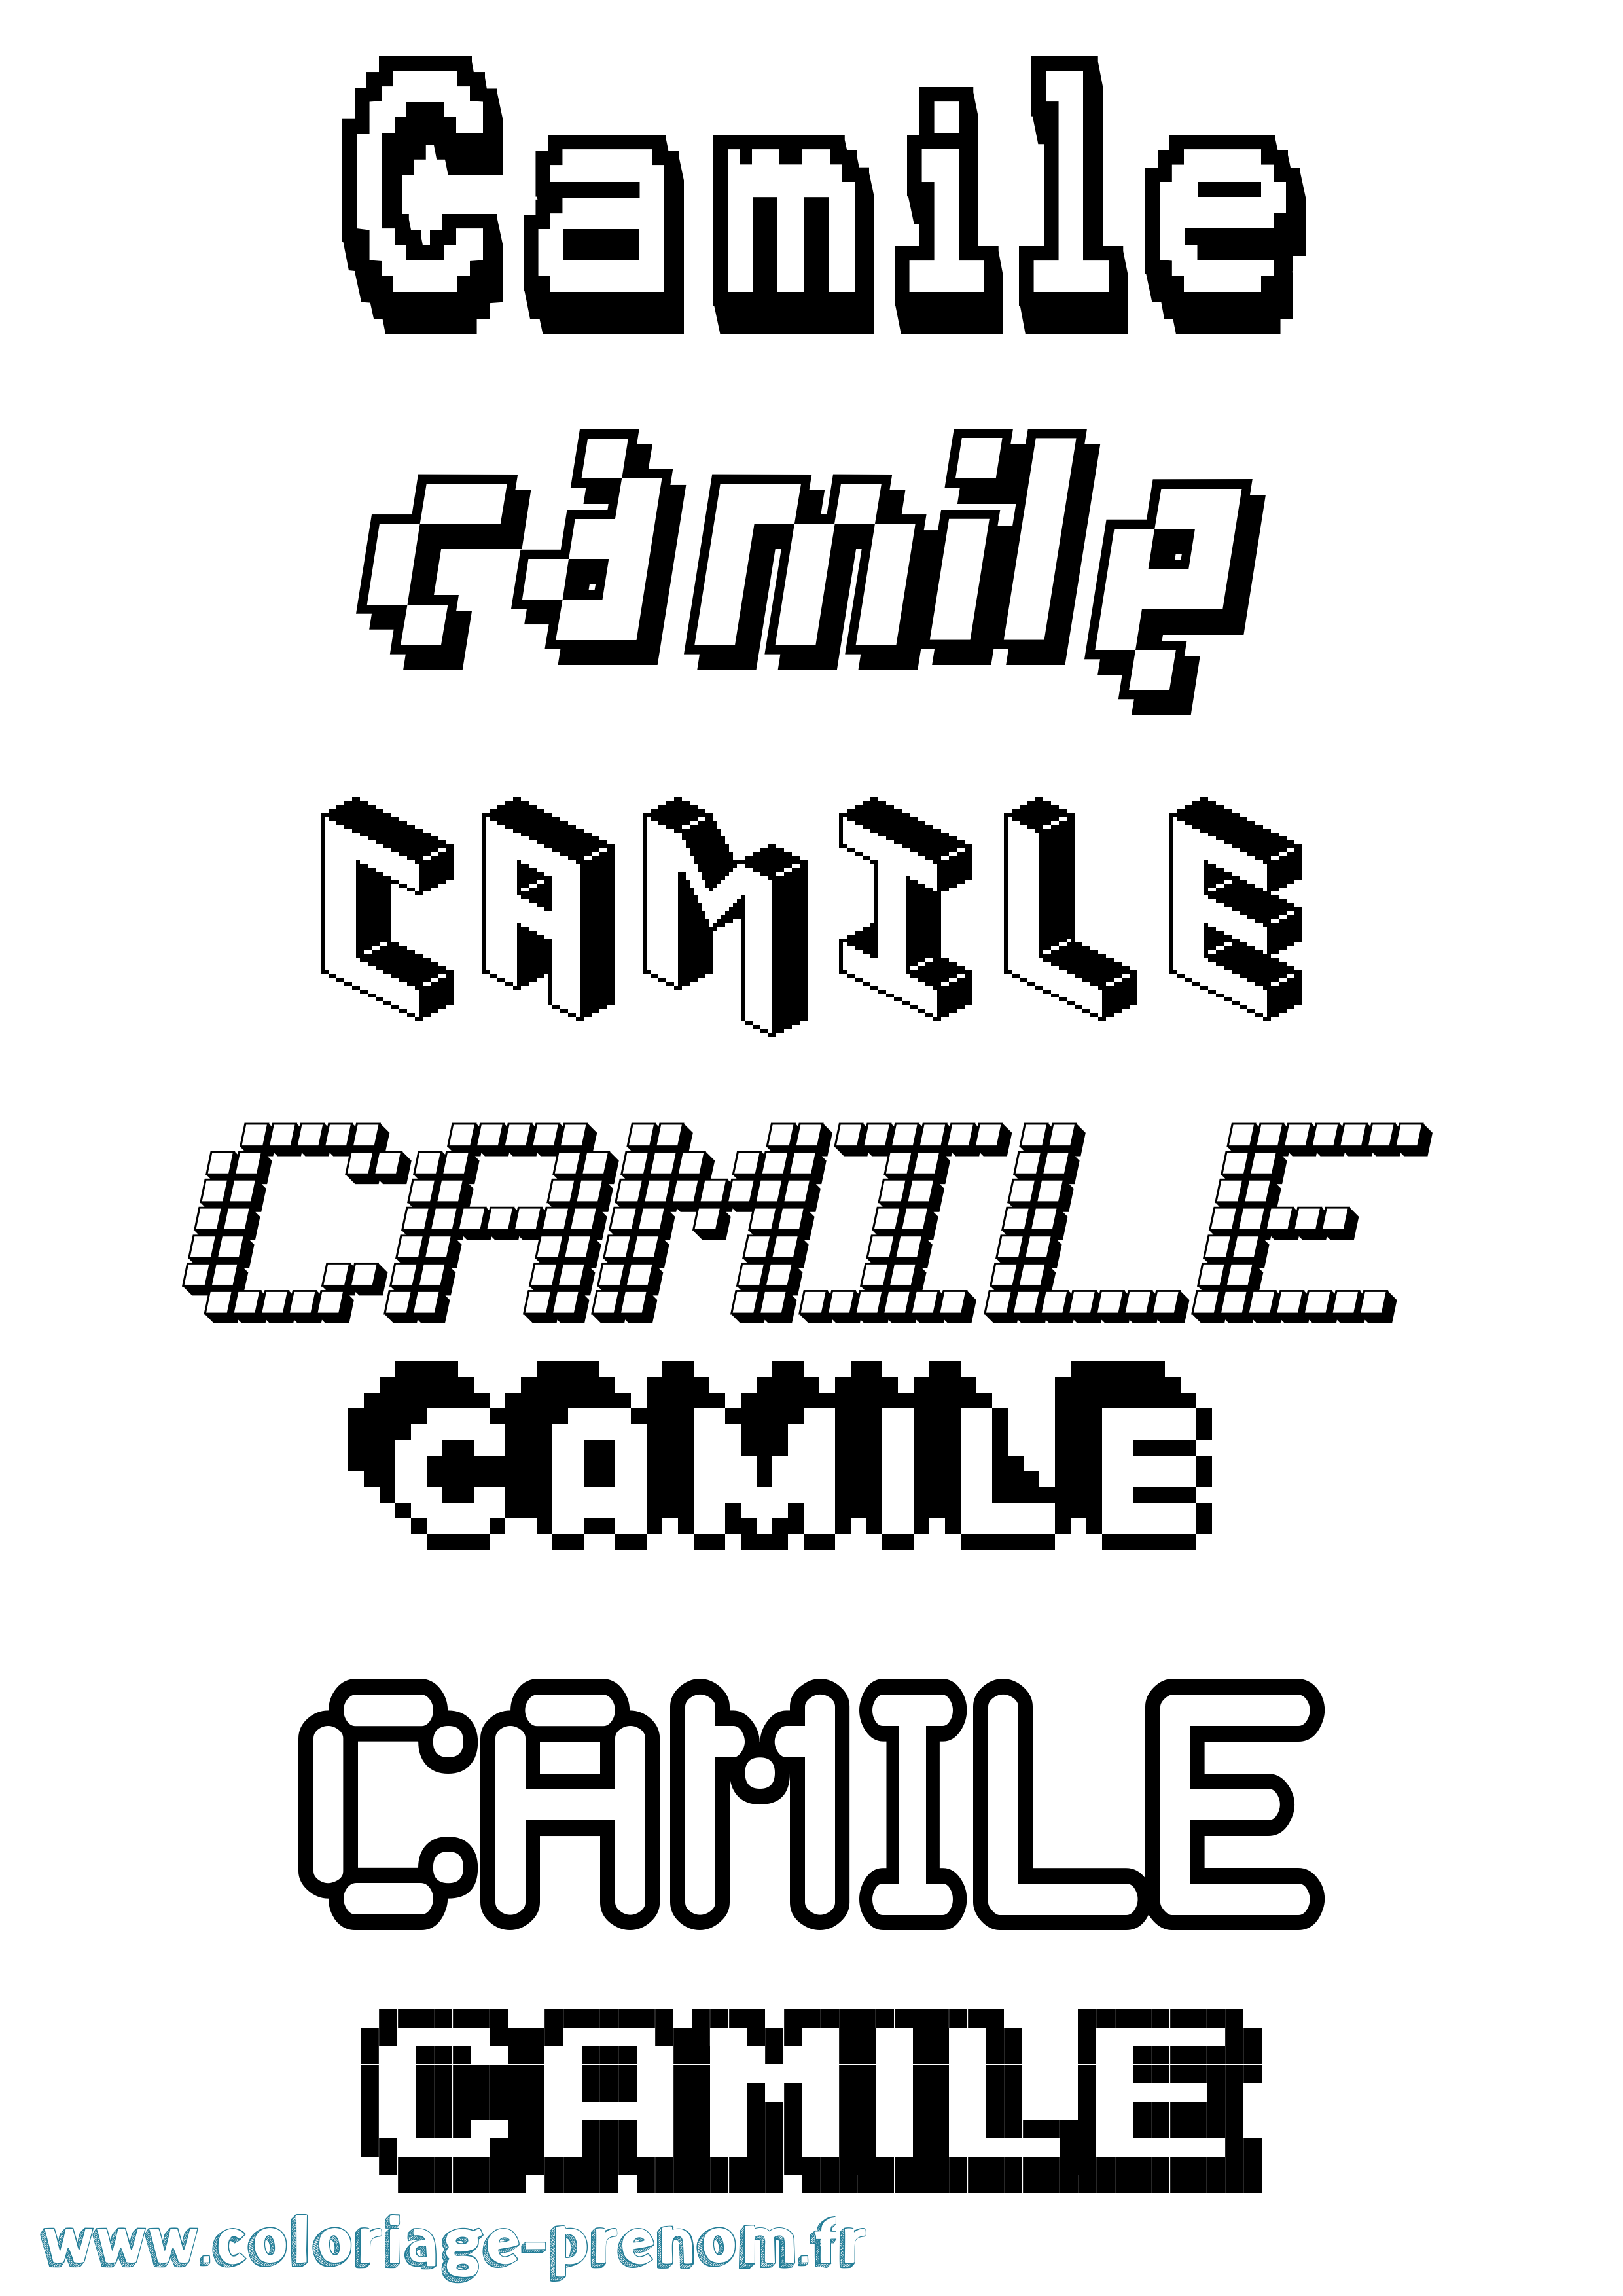 Coloriage prénom Camile Pixel